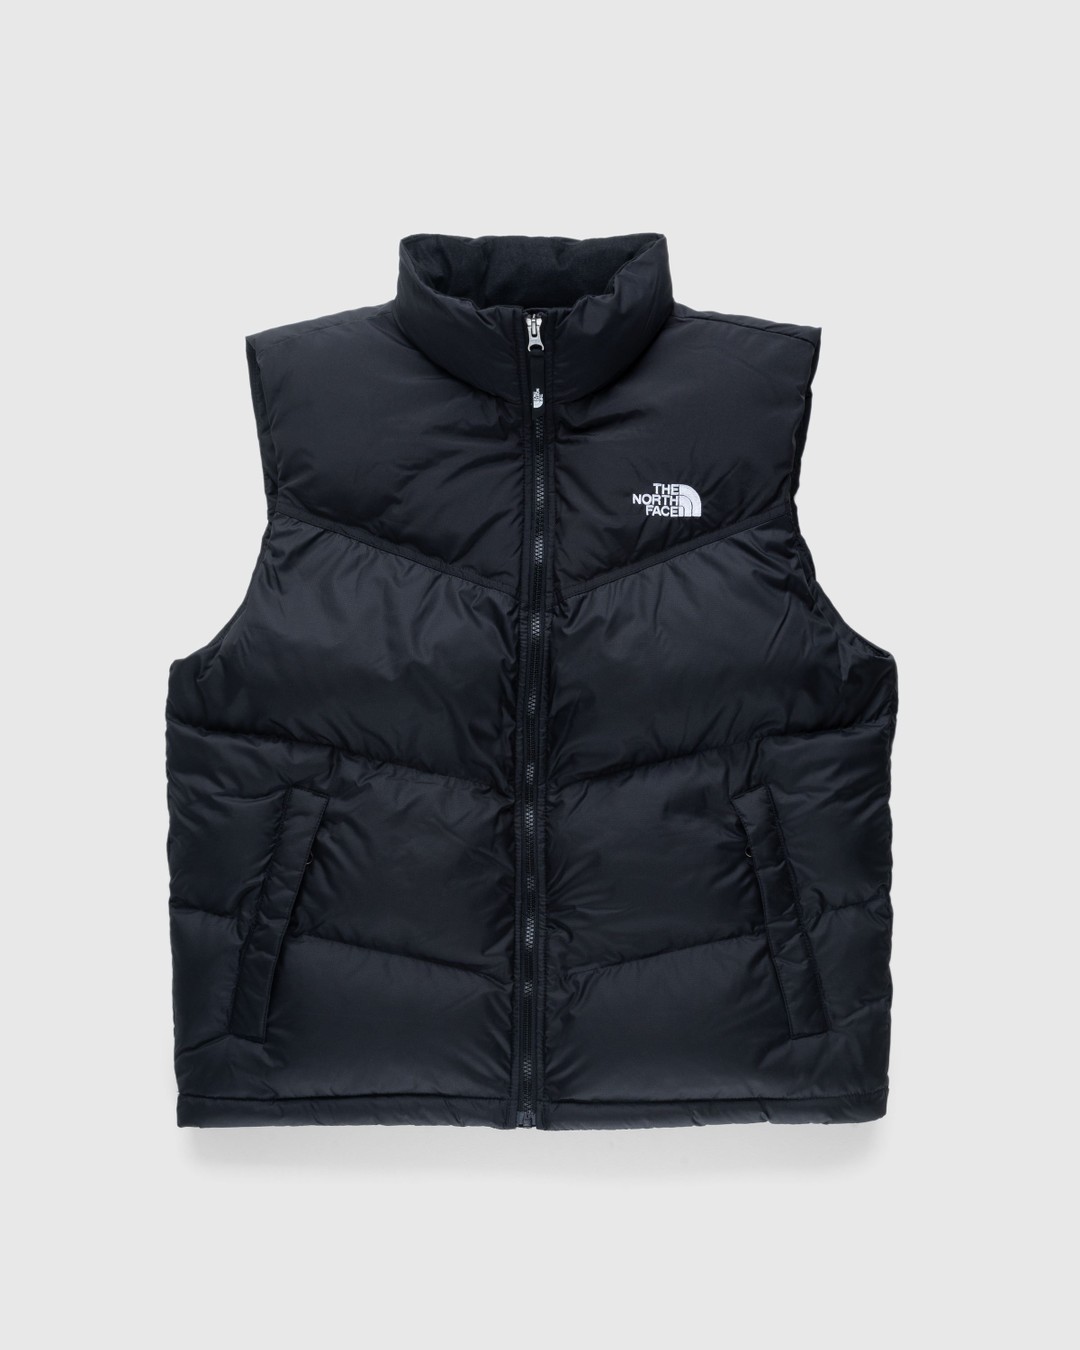 The North Face – Saikuru Vest TNF Black - Outerwear - Black - Image 1